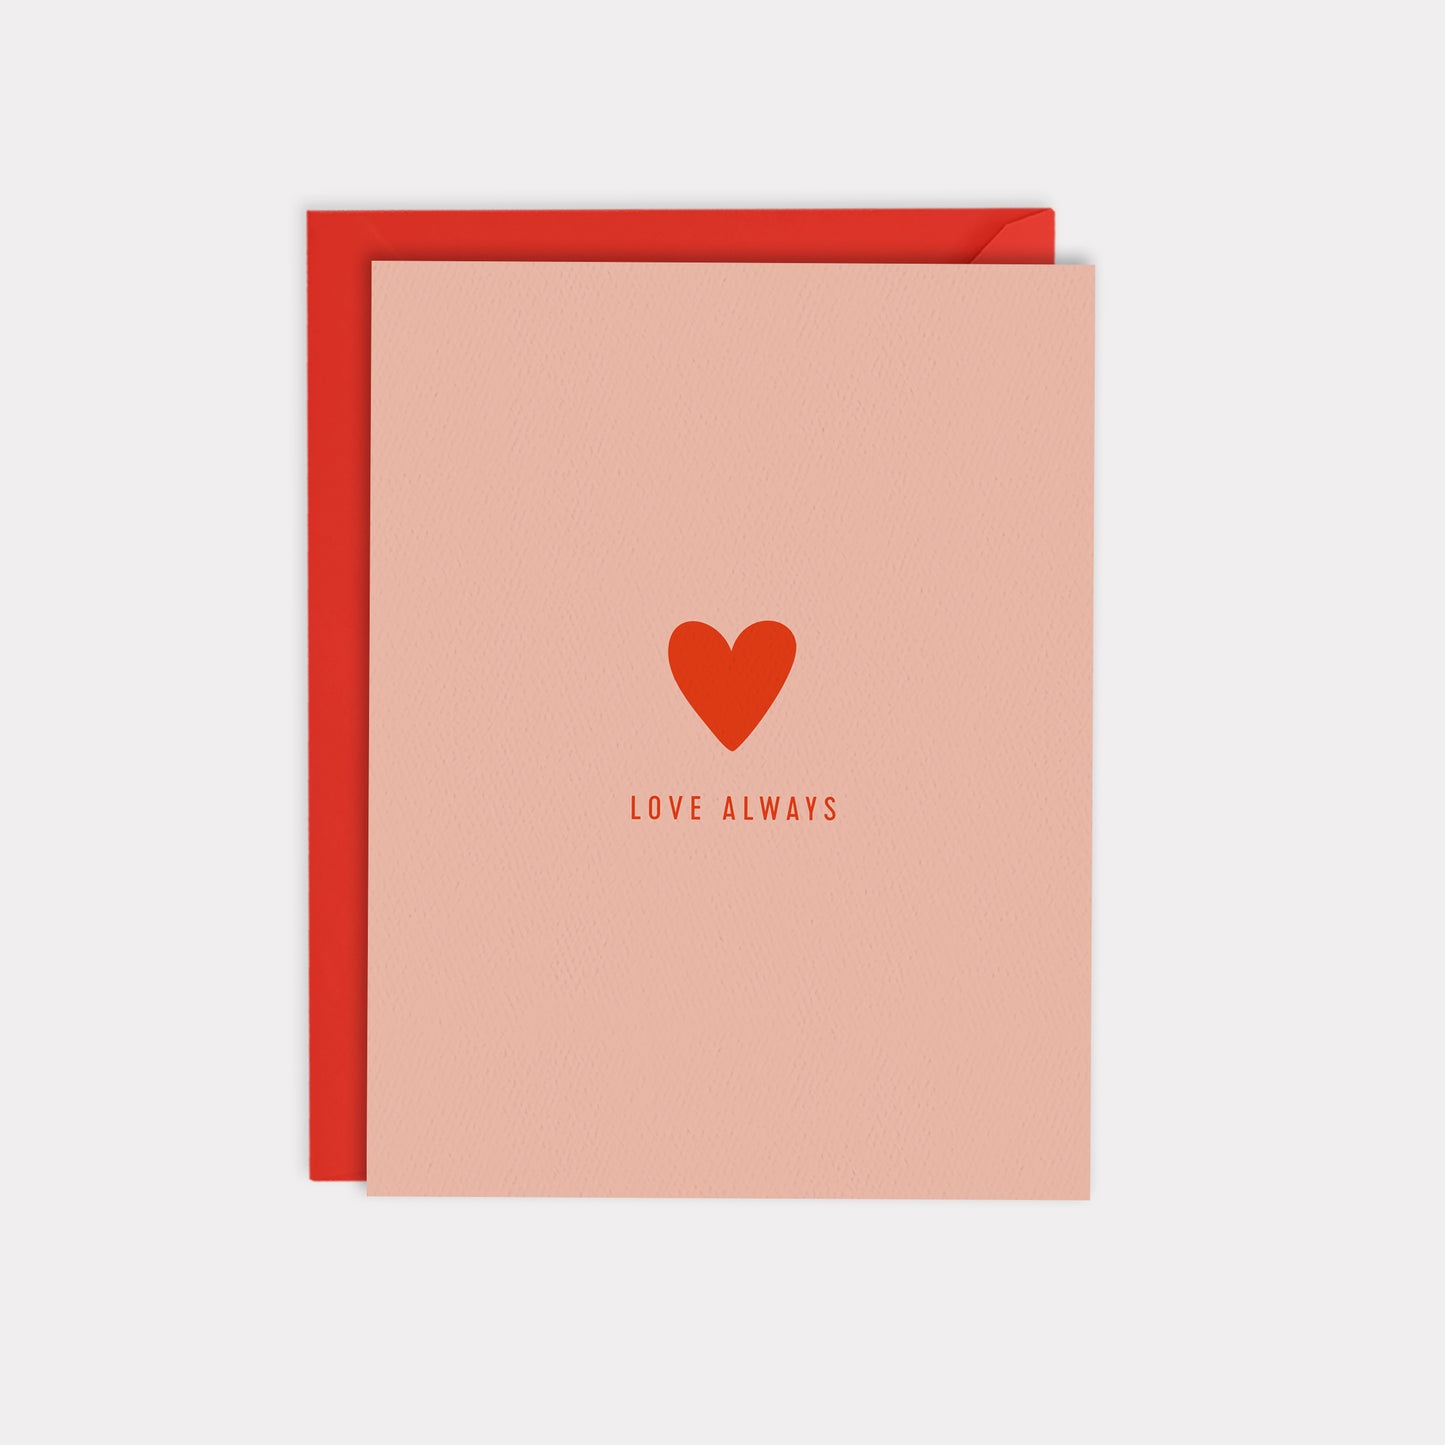 LOVE ALWAYS CARD - Romantic Anniversary Card